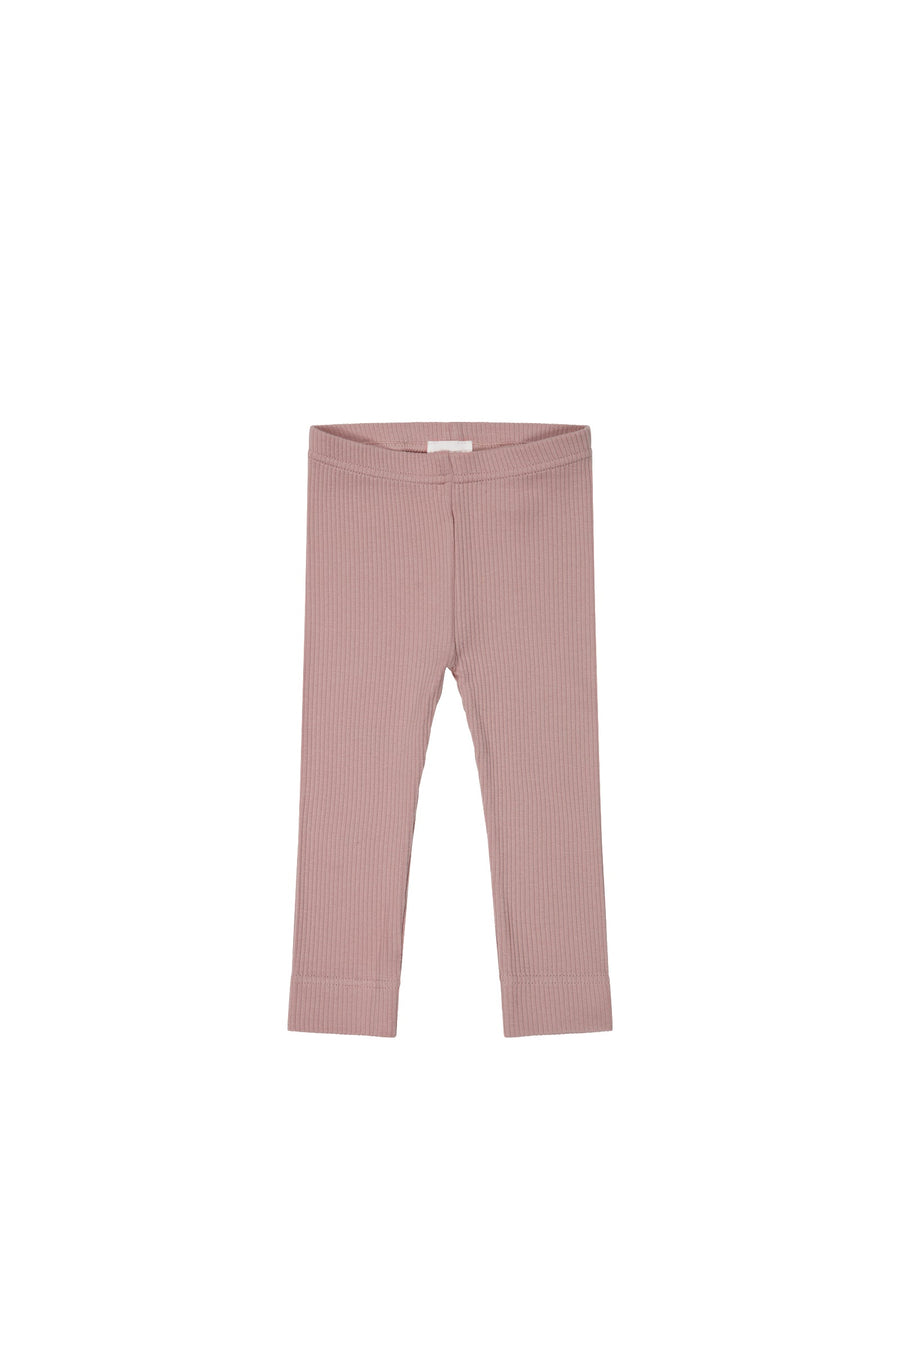 Pink Cotton : Shop Dark Rose Cotton Spandex Ankle Length Legging Online at  Soch